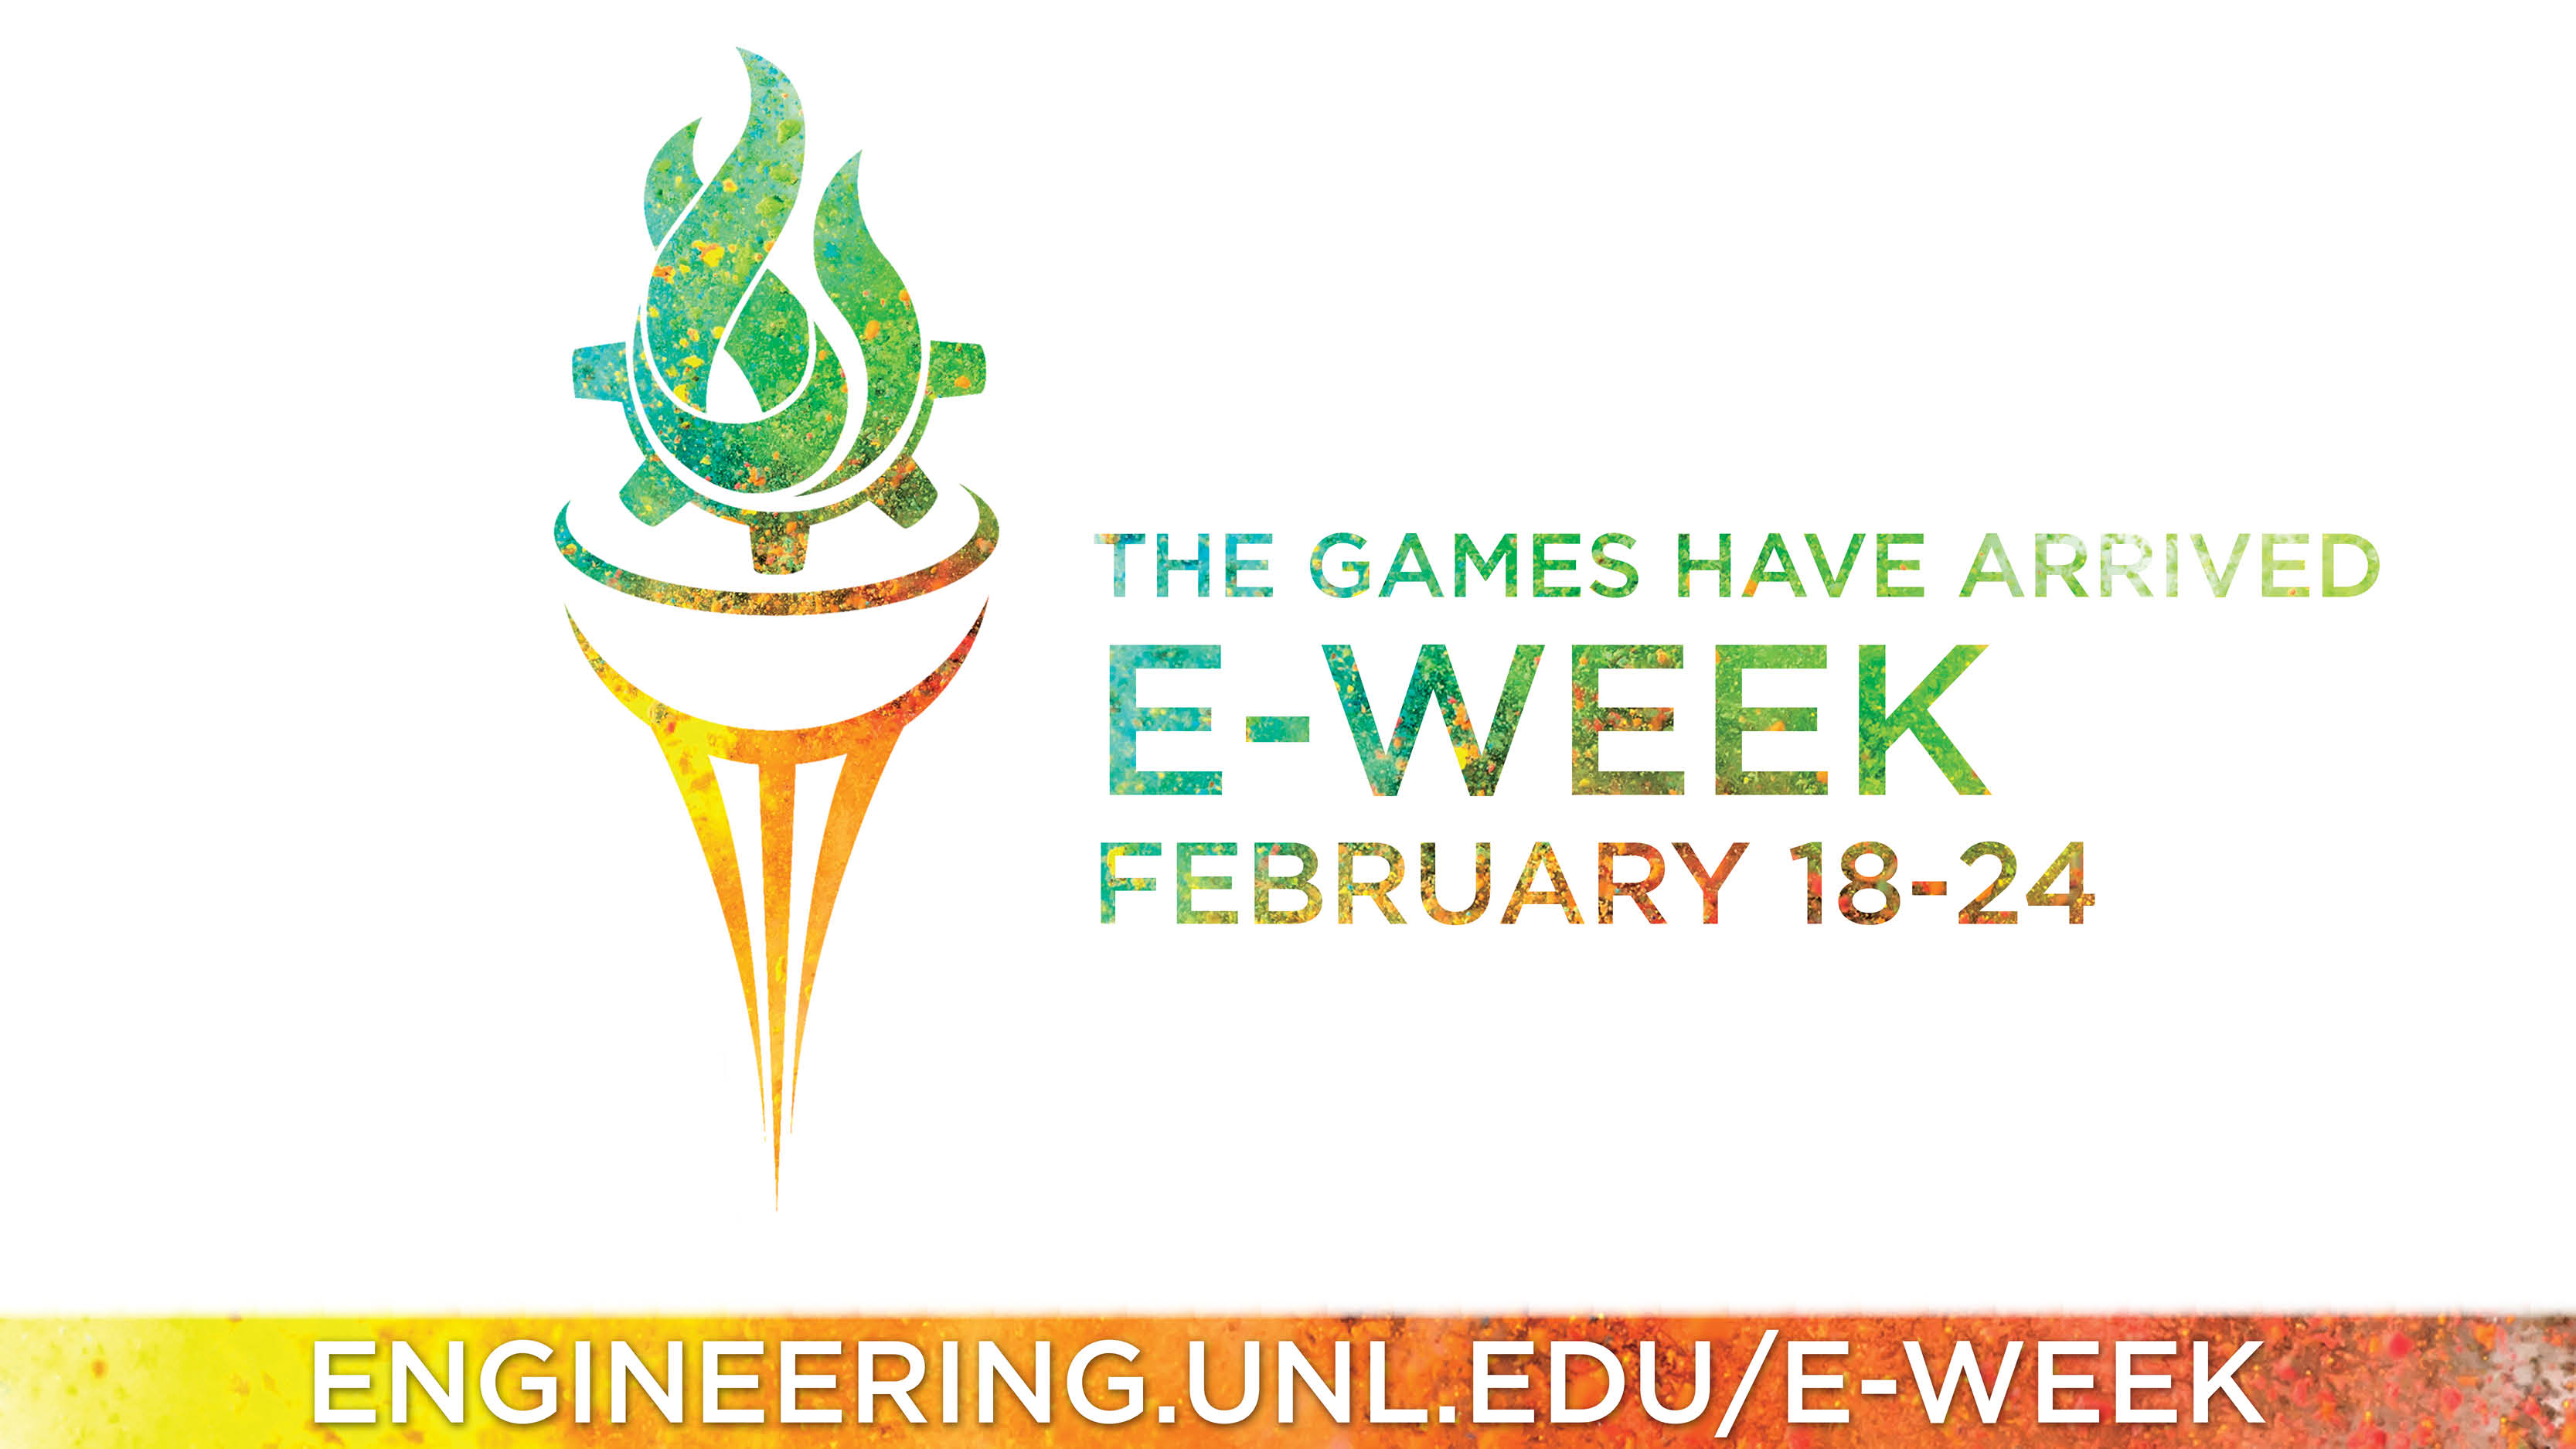 The 2018 E-Week Winter Games run Sunday through Saturday, Feb. 18-24.